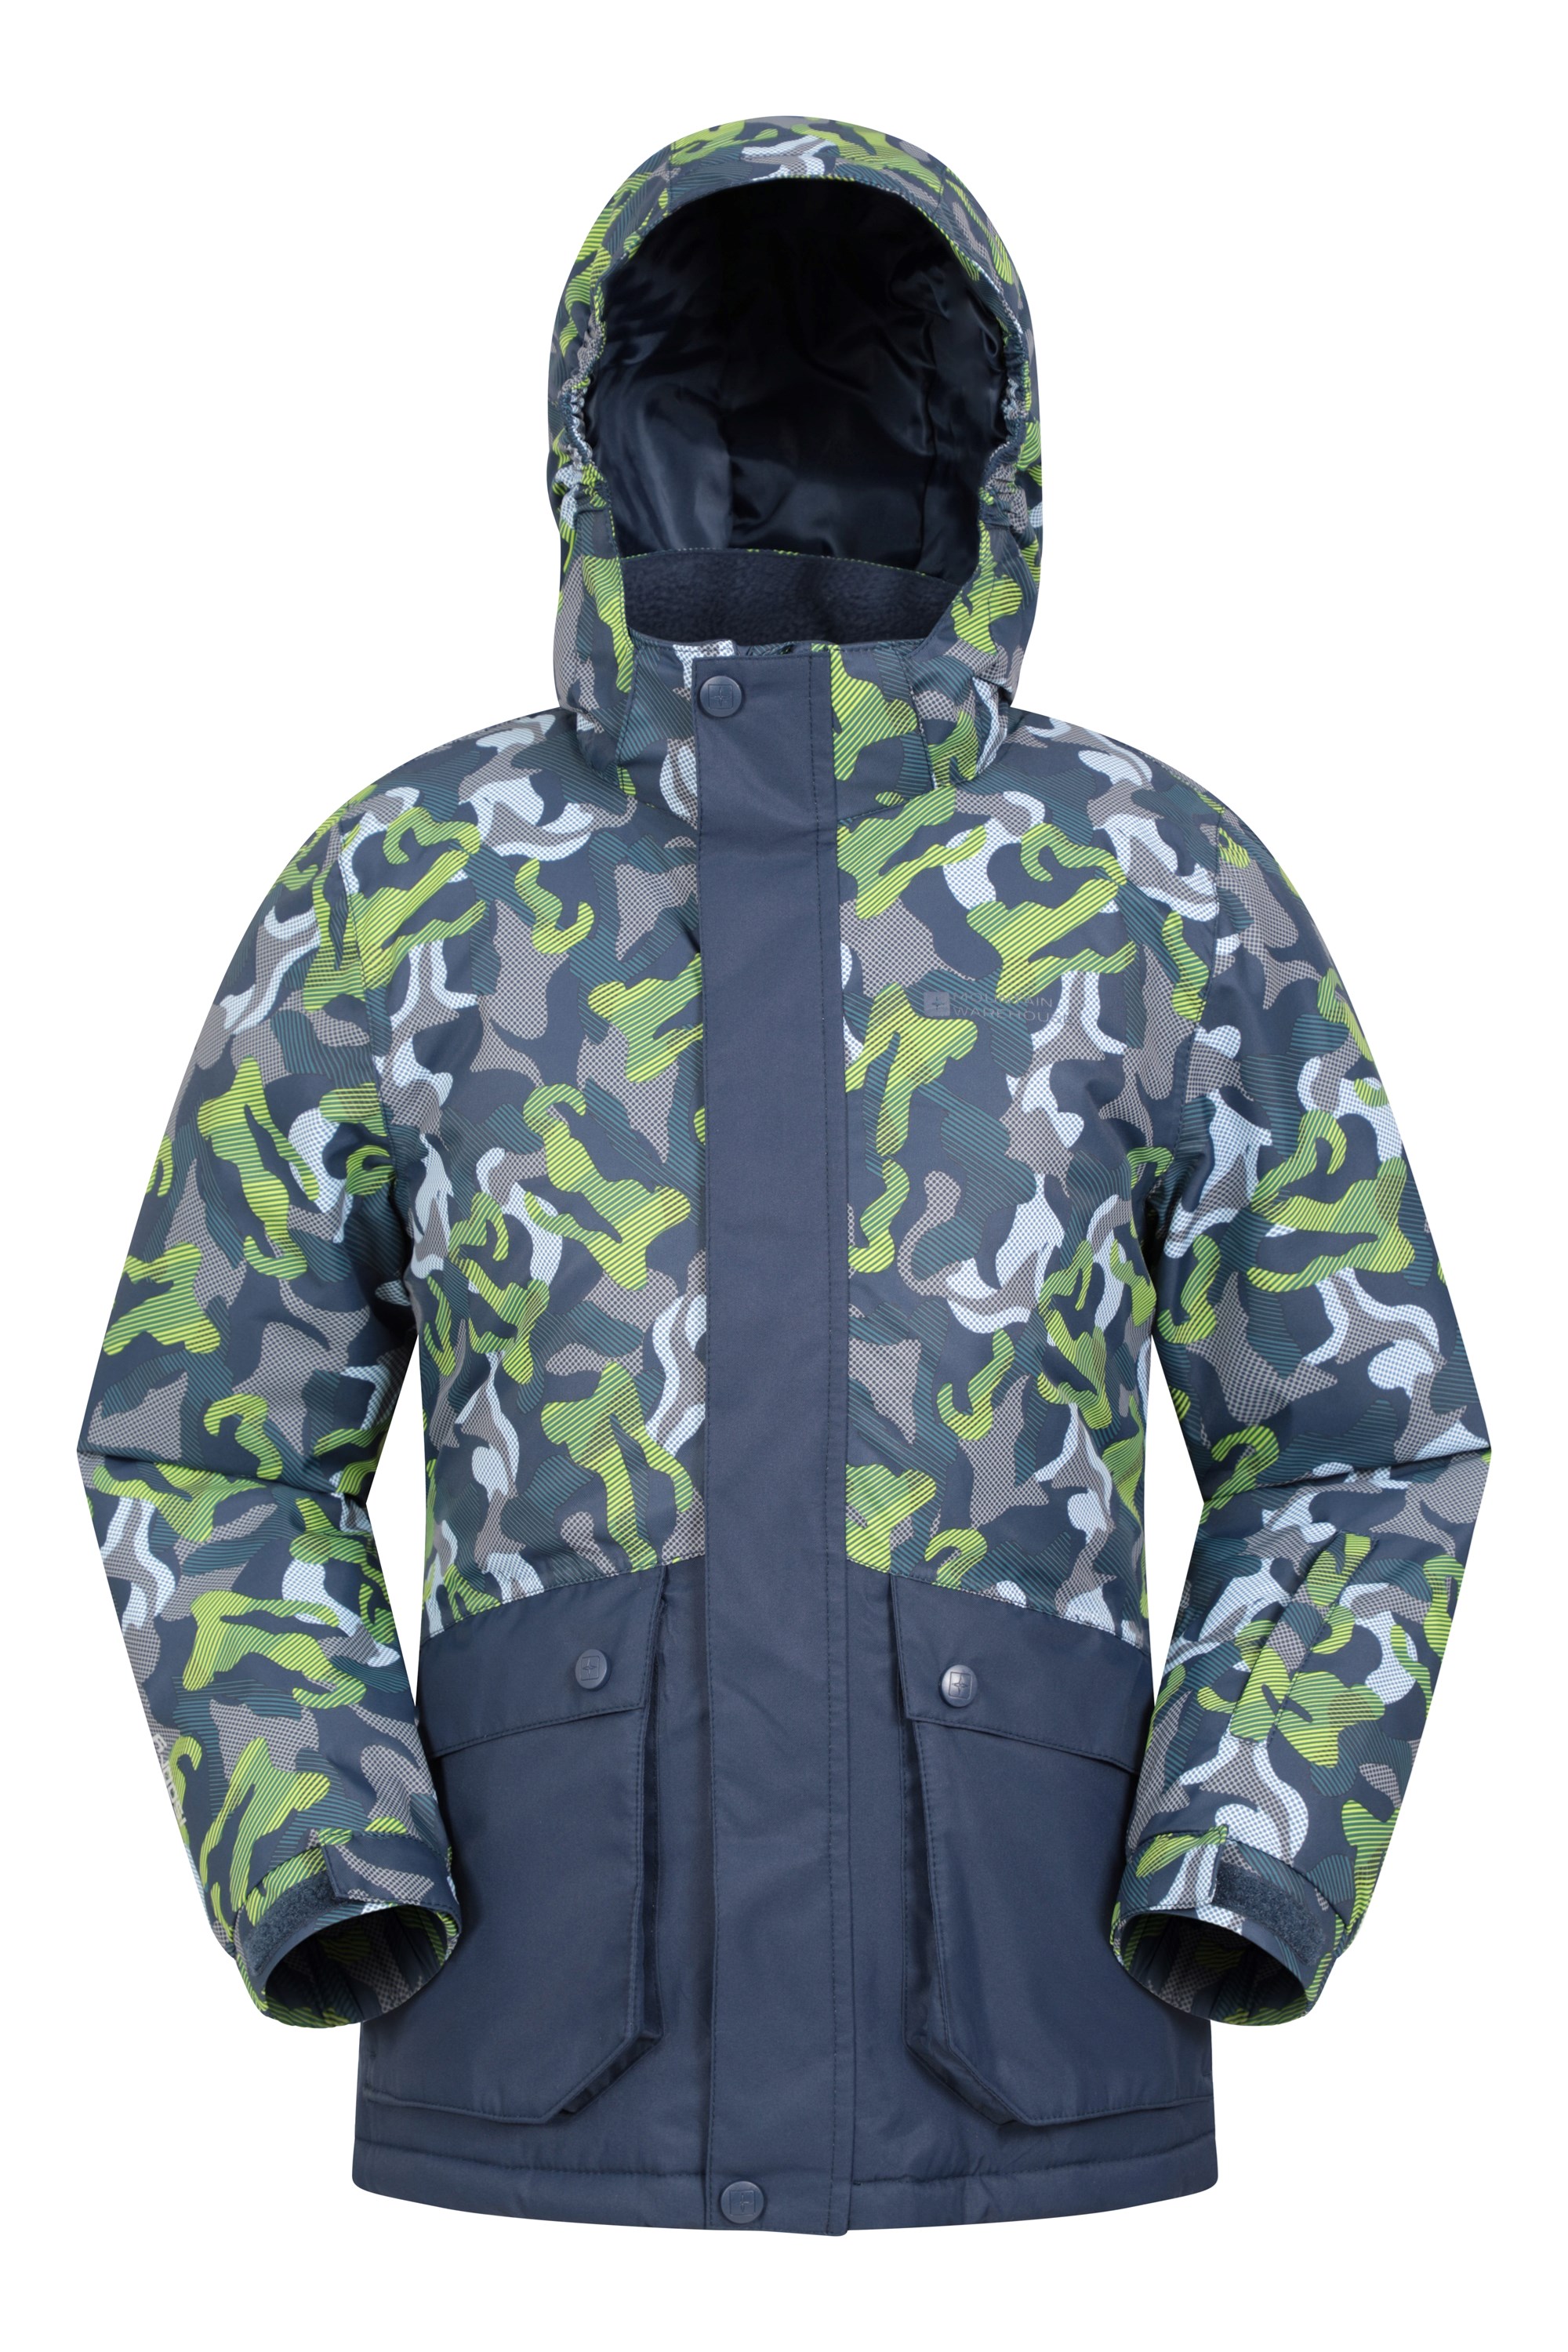 Vail Youth Waterproof Ski Jacket - Navy